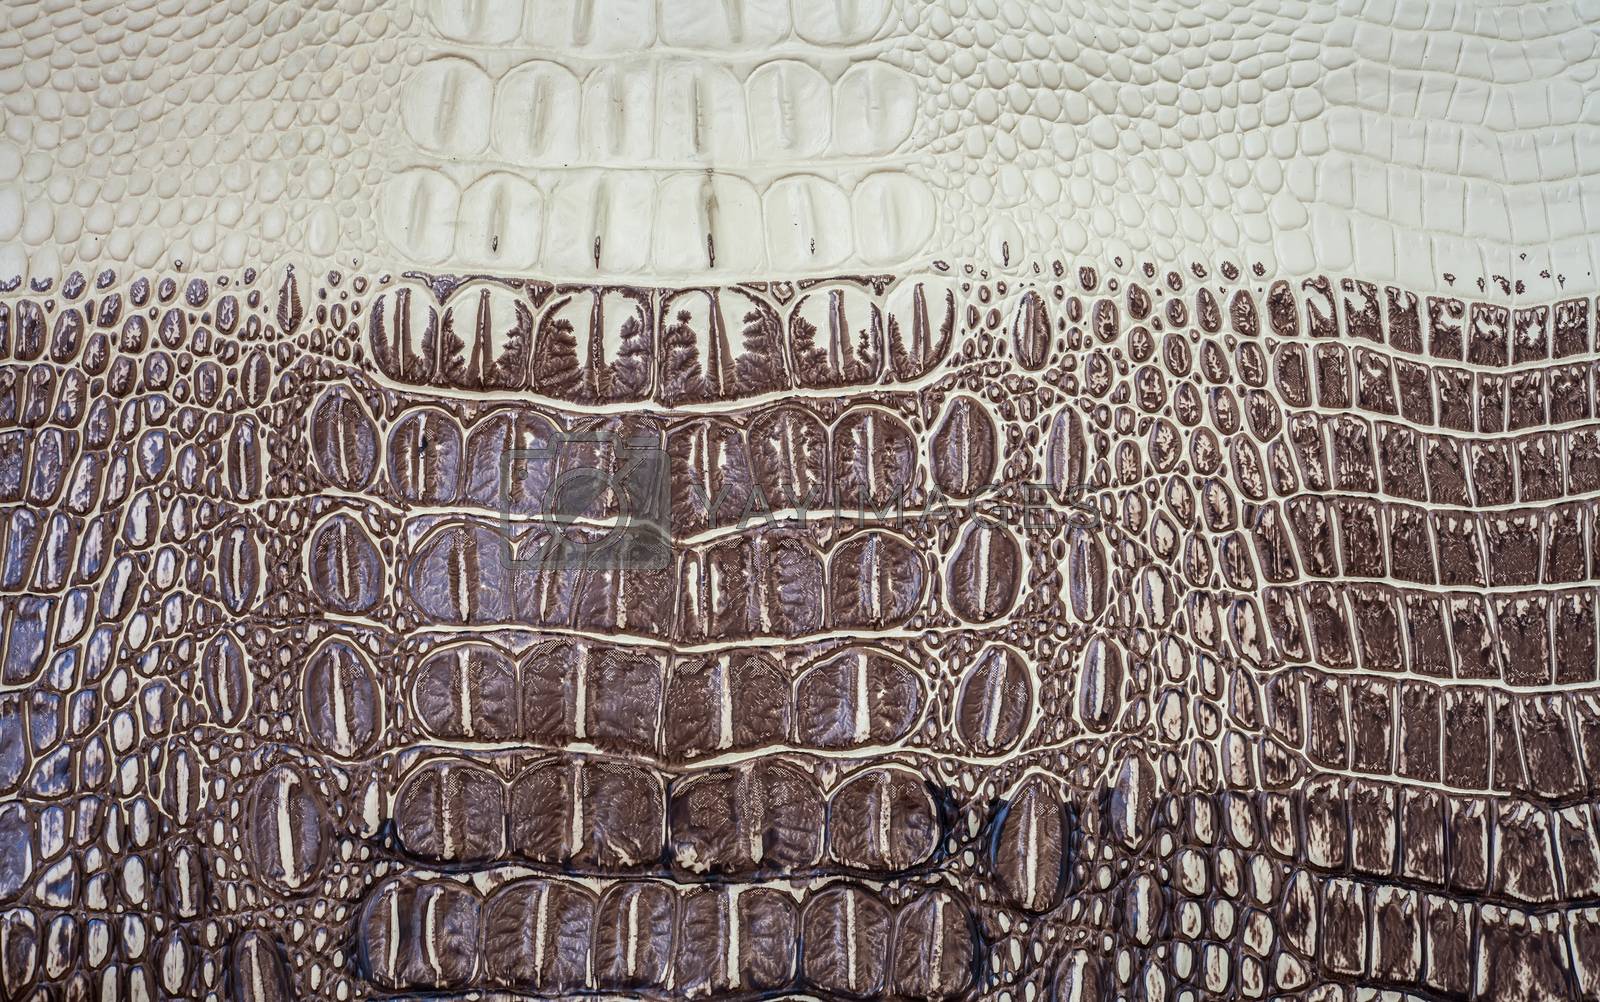 Royalty free image of Crocodile skin texture by amnarj2006